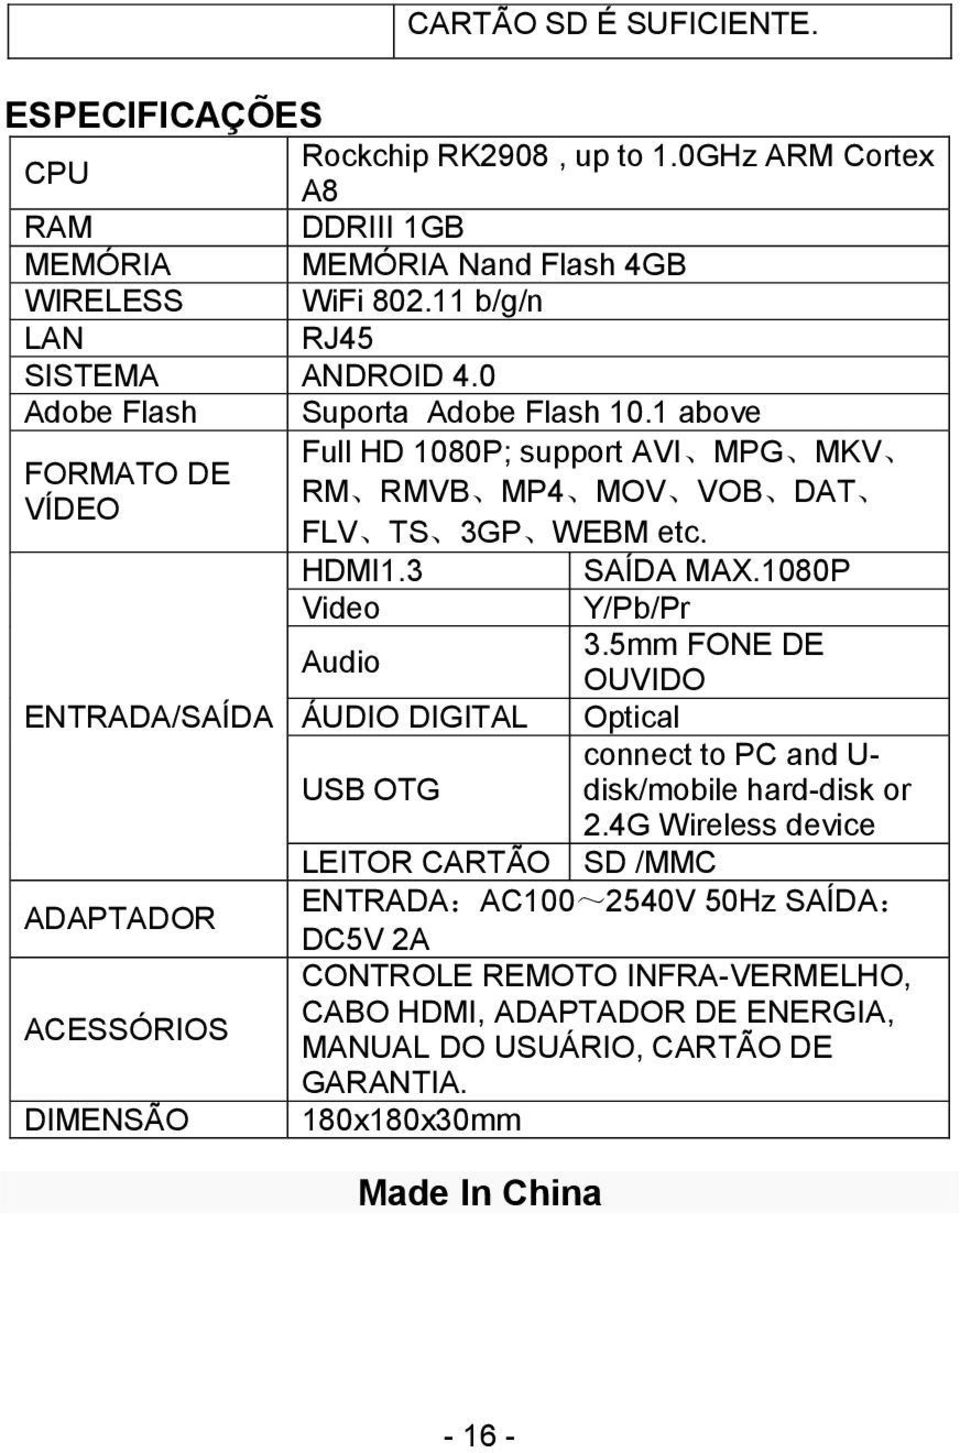 3 SAÍDA MAX.1080P Video Y/Pb/Pr Audio 3.5mm FONE DE OUVIDO ENTRADA/SAÍDA ÁUDIO DIGITAL Optical USB OTG connect to PC and U- disk/mobile hard-disk or 2.